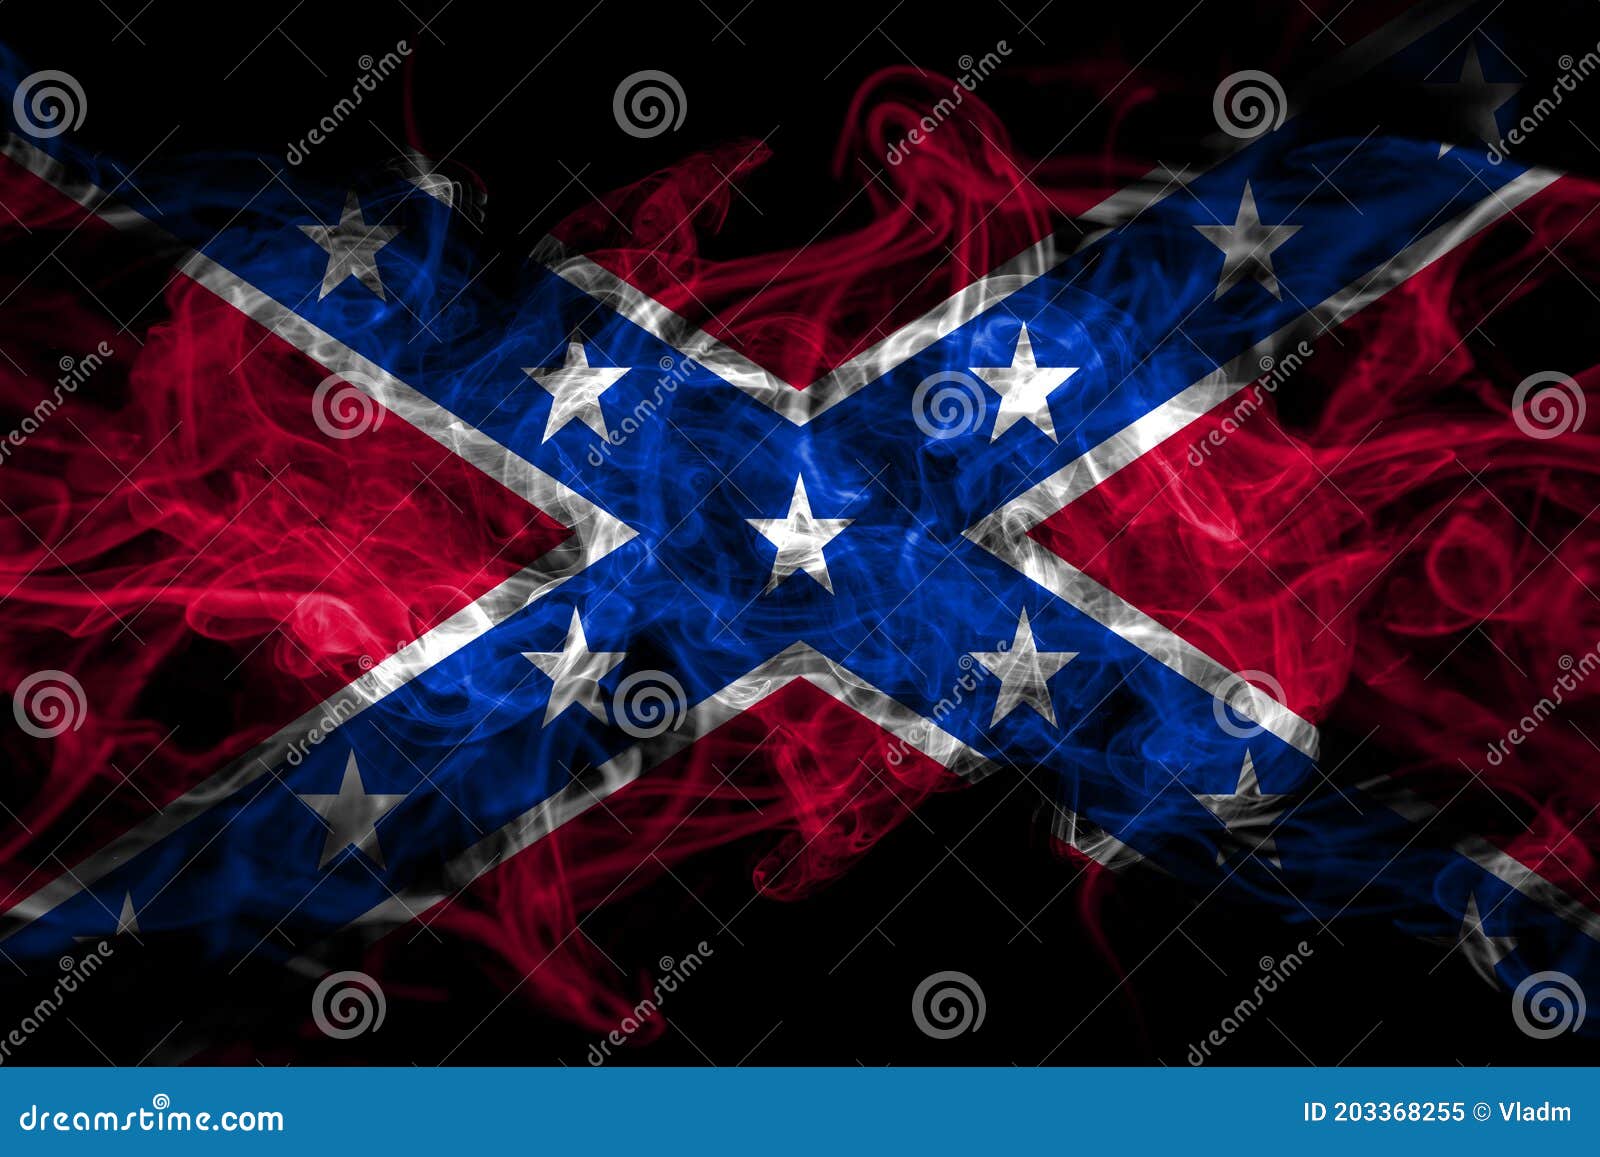 united states of america, america, us, usa, american, confederate navy jack smoke flag  on black background